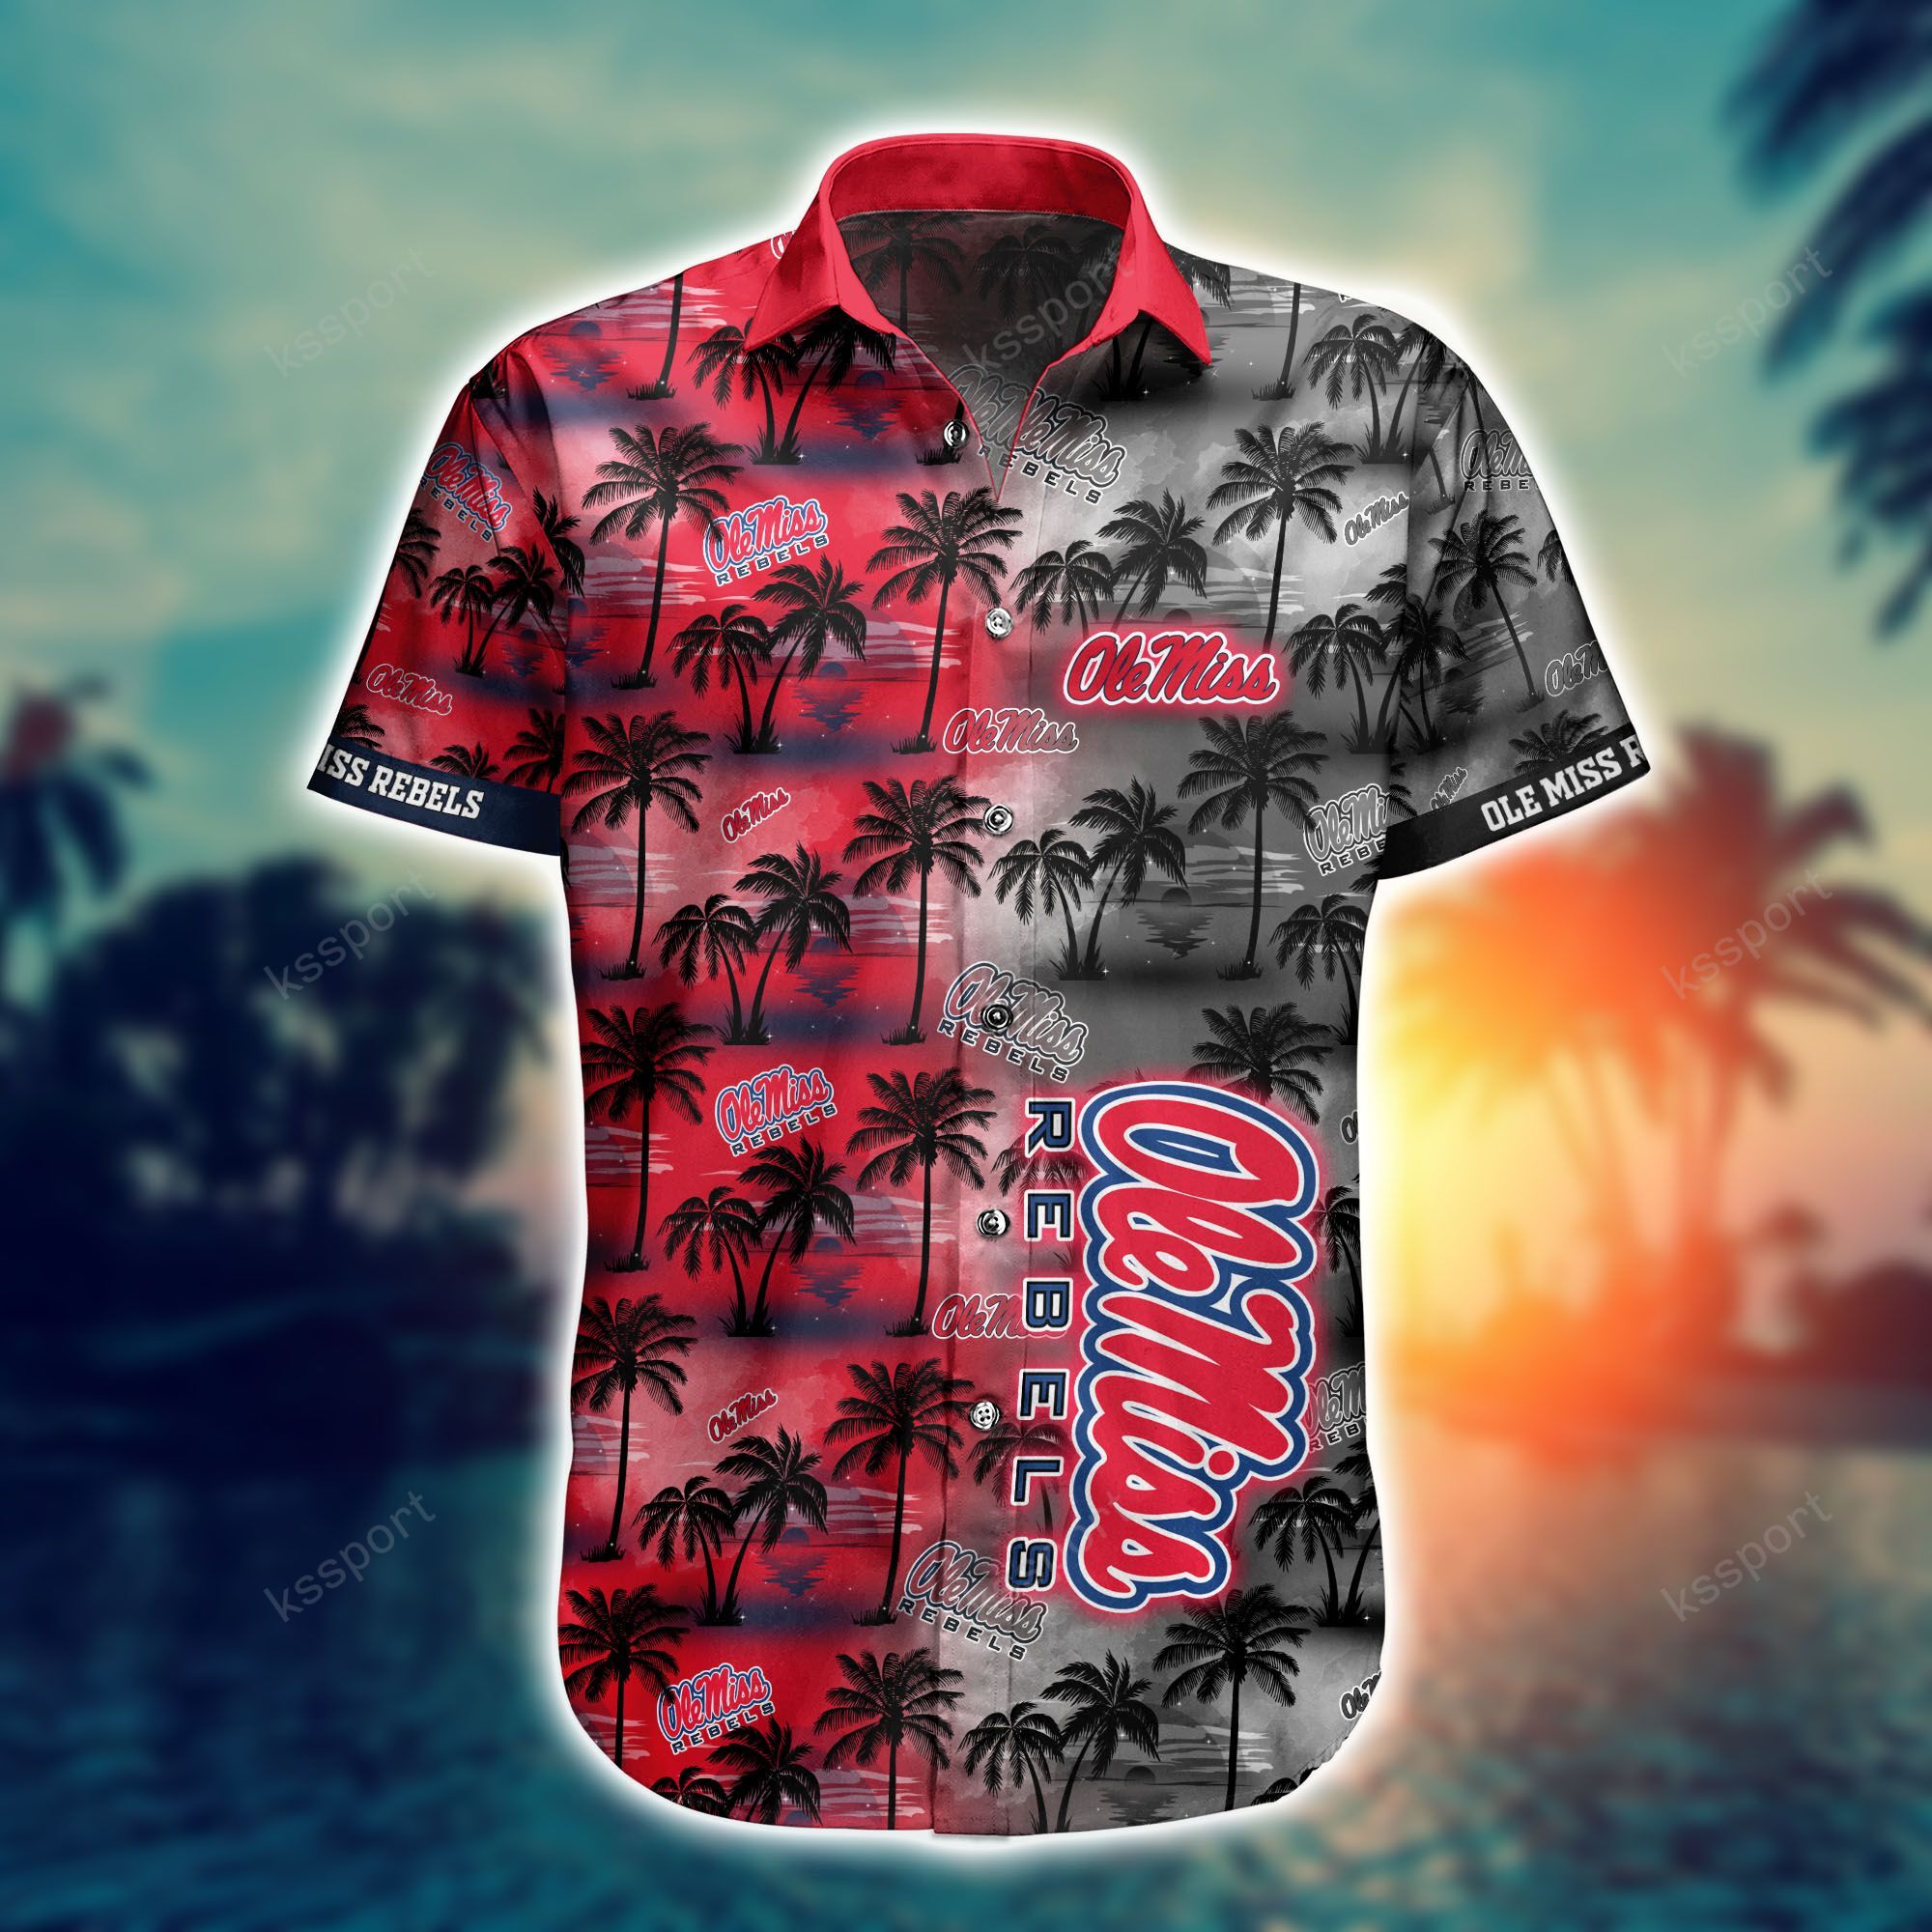 Hawaiian shirt and shorts is a great way to look stylish at a beach party 91